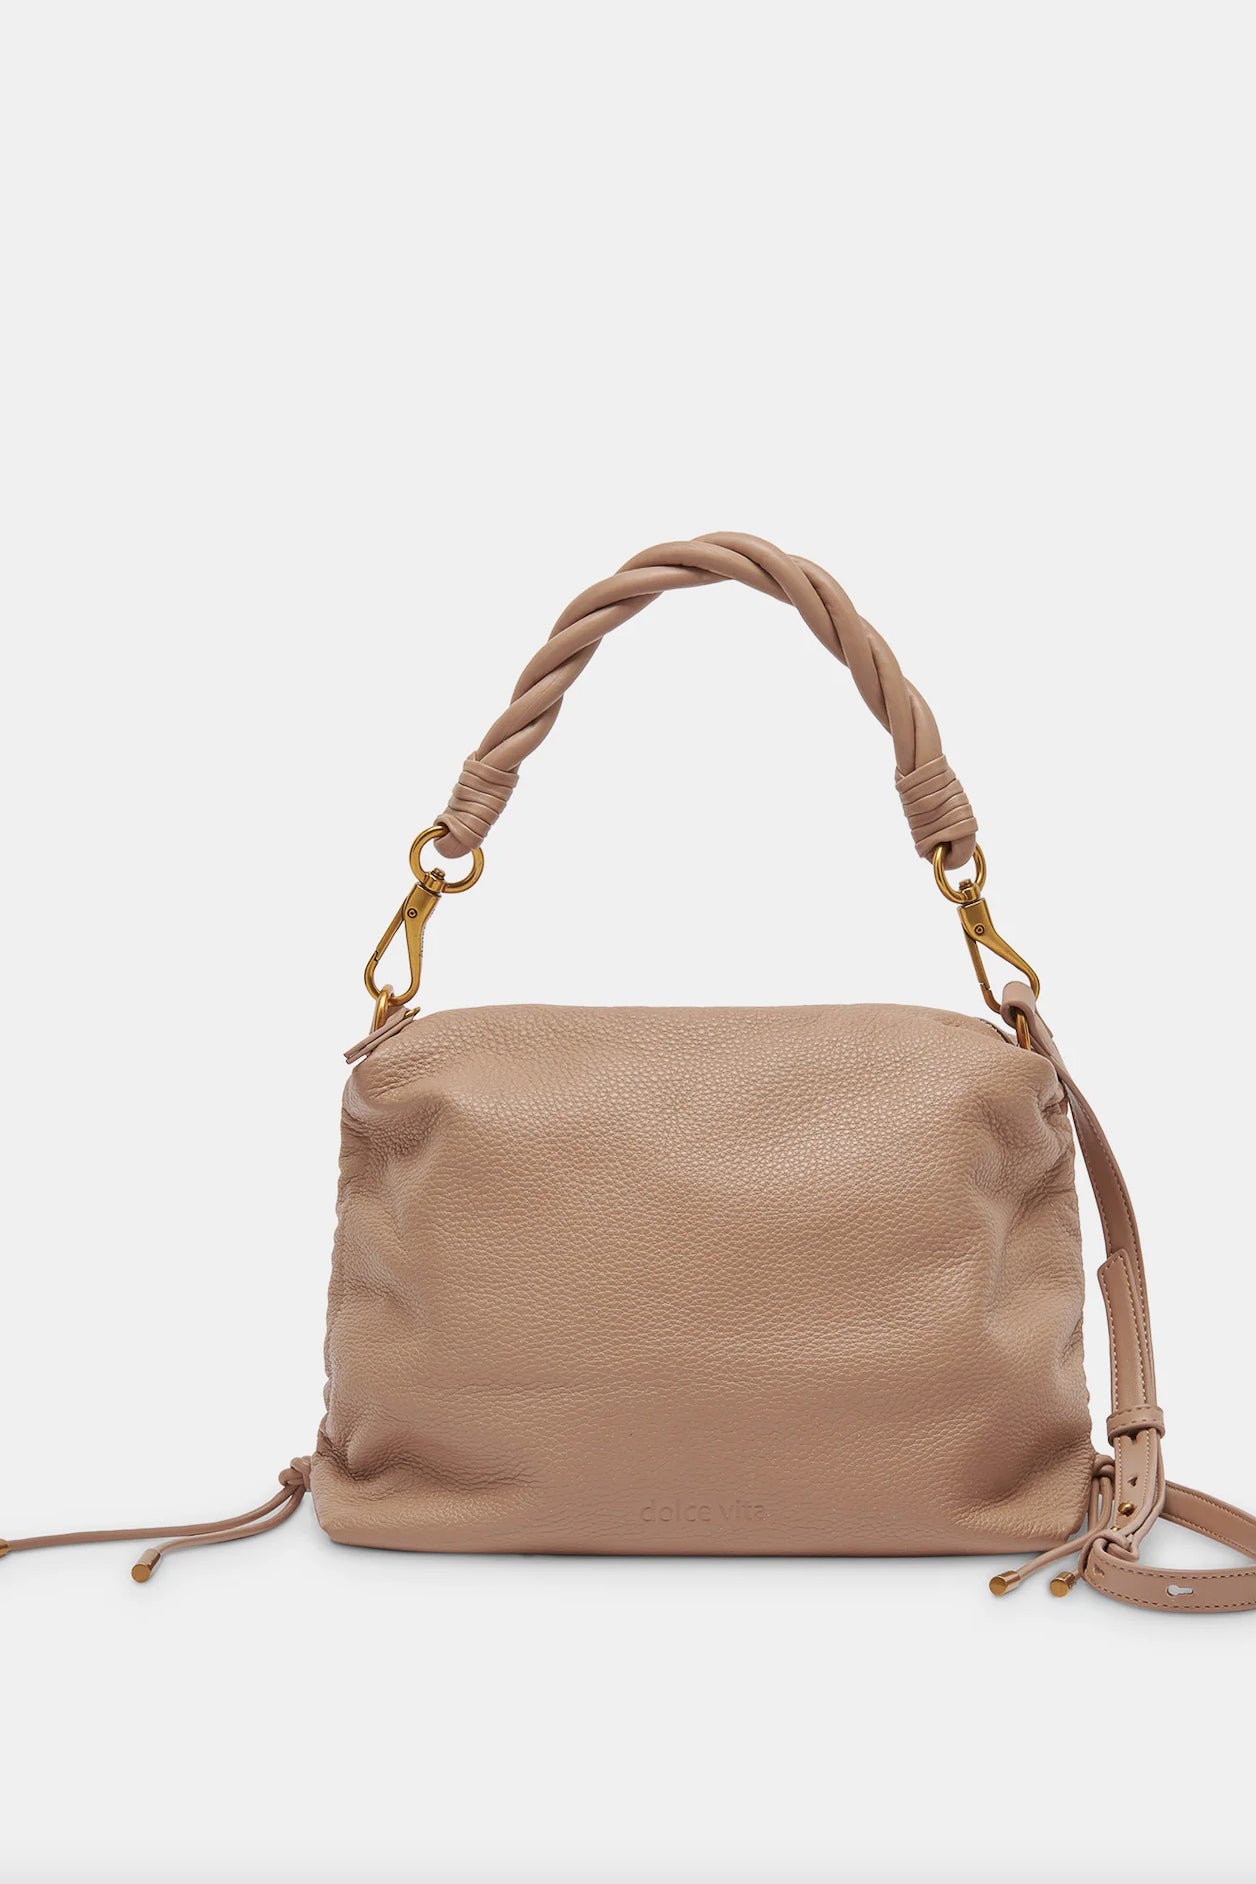 Fossil Preston Leather Flap Shoulder Bag, $198 | Macy's | Lookastic